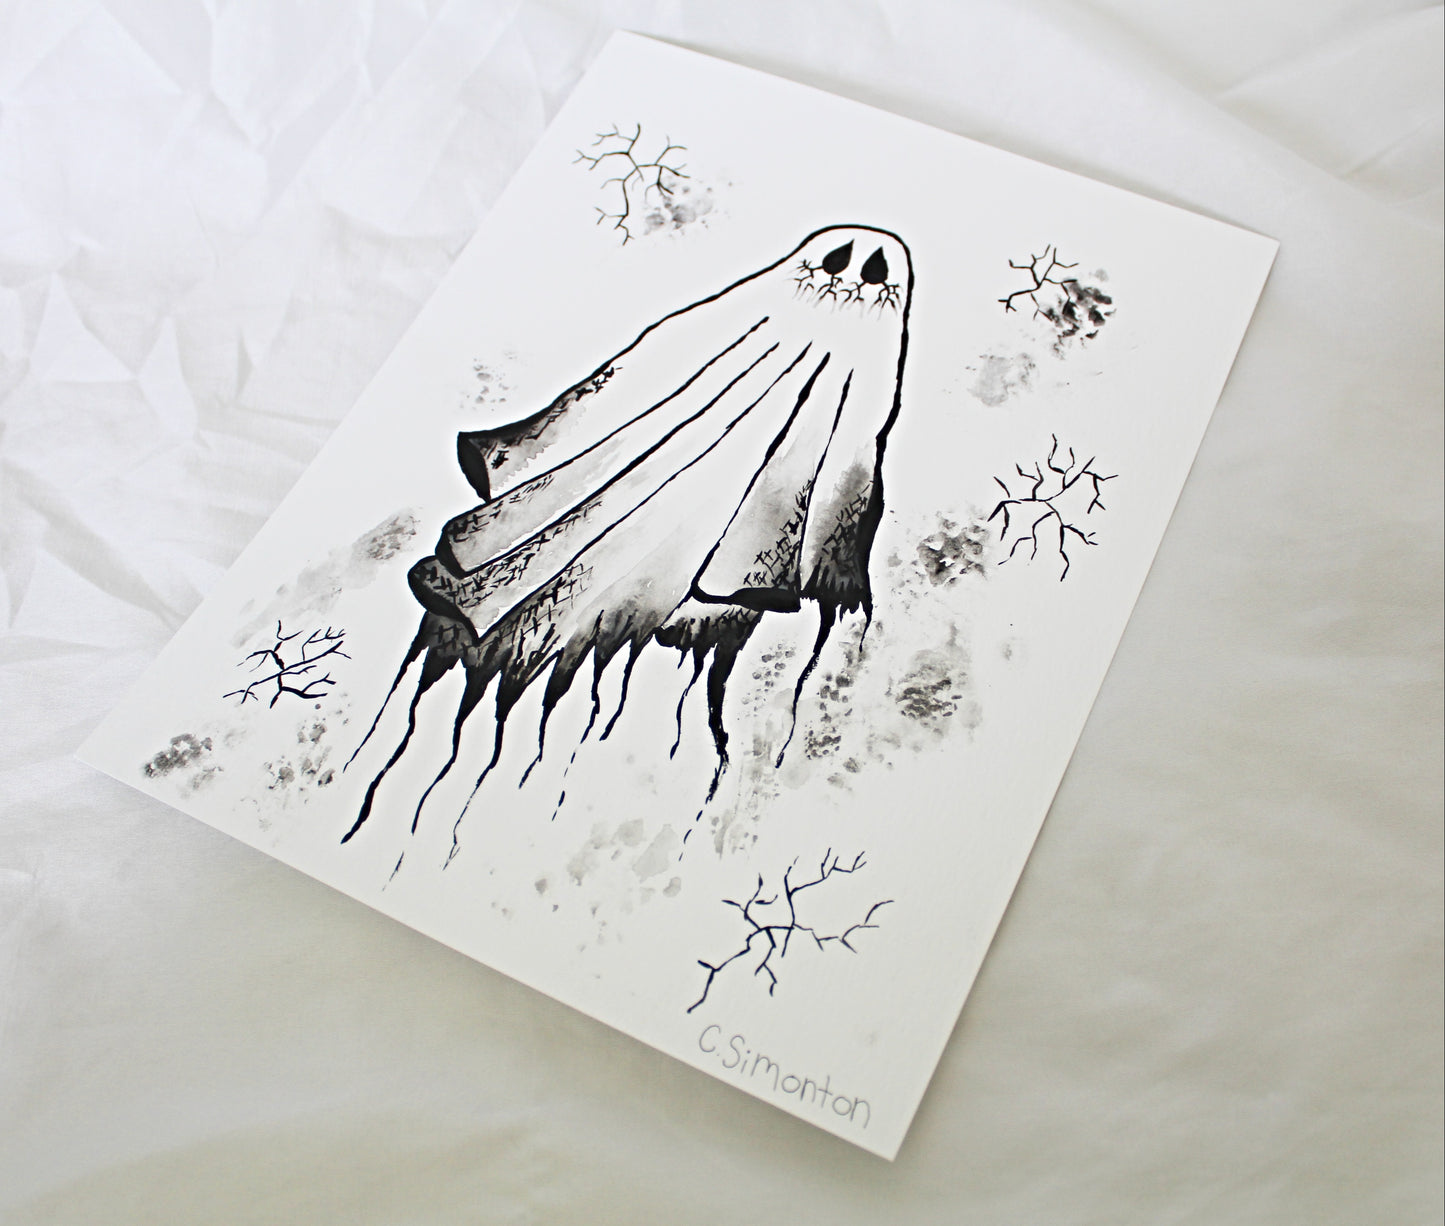 Ghost Art Print